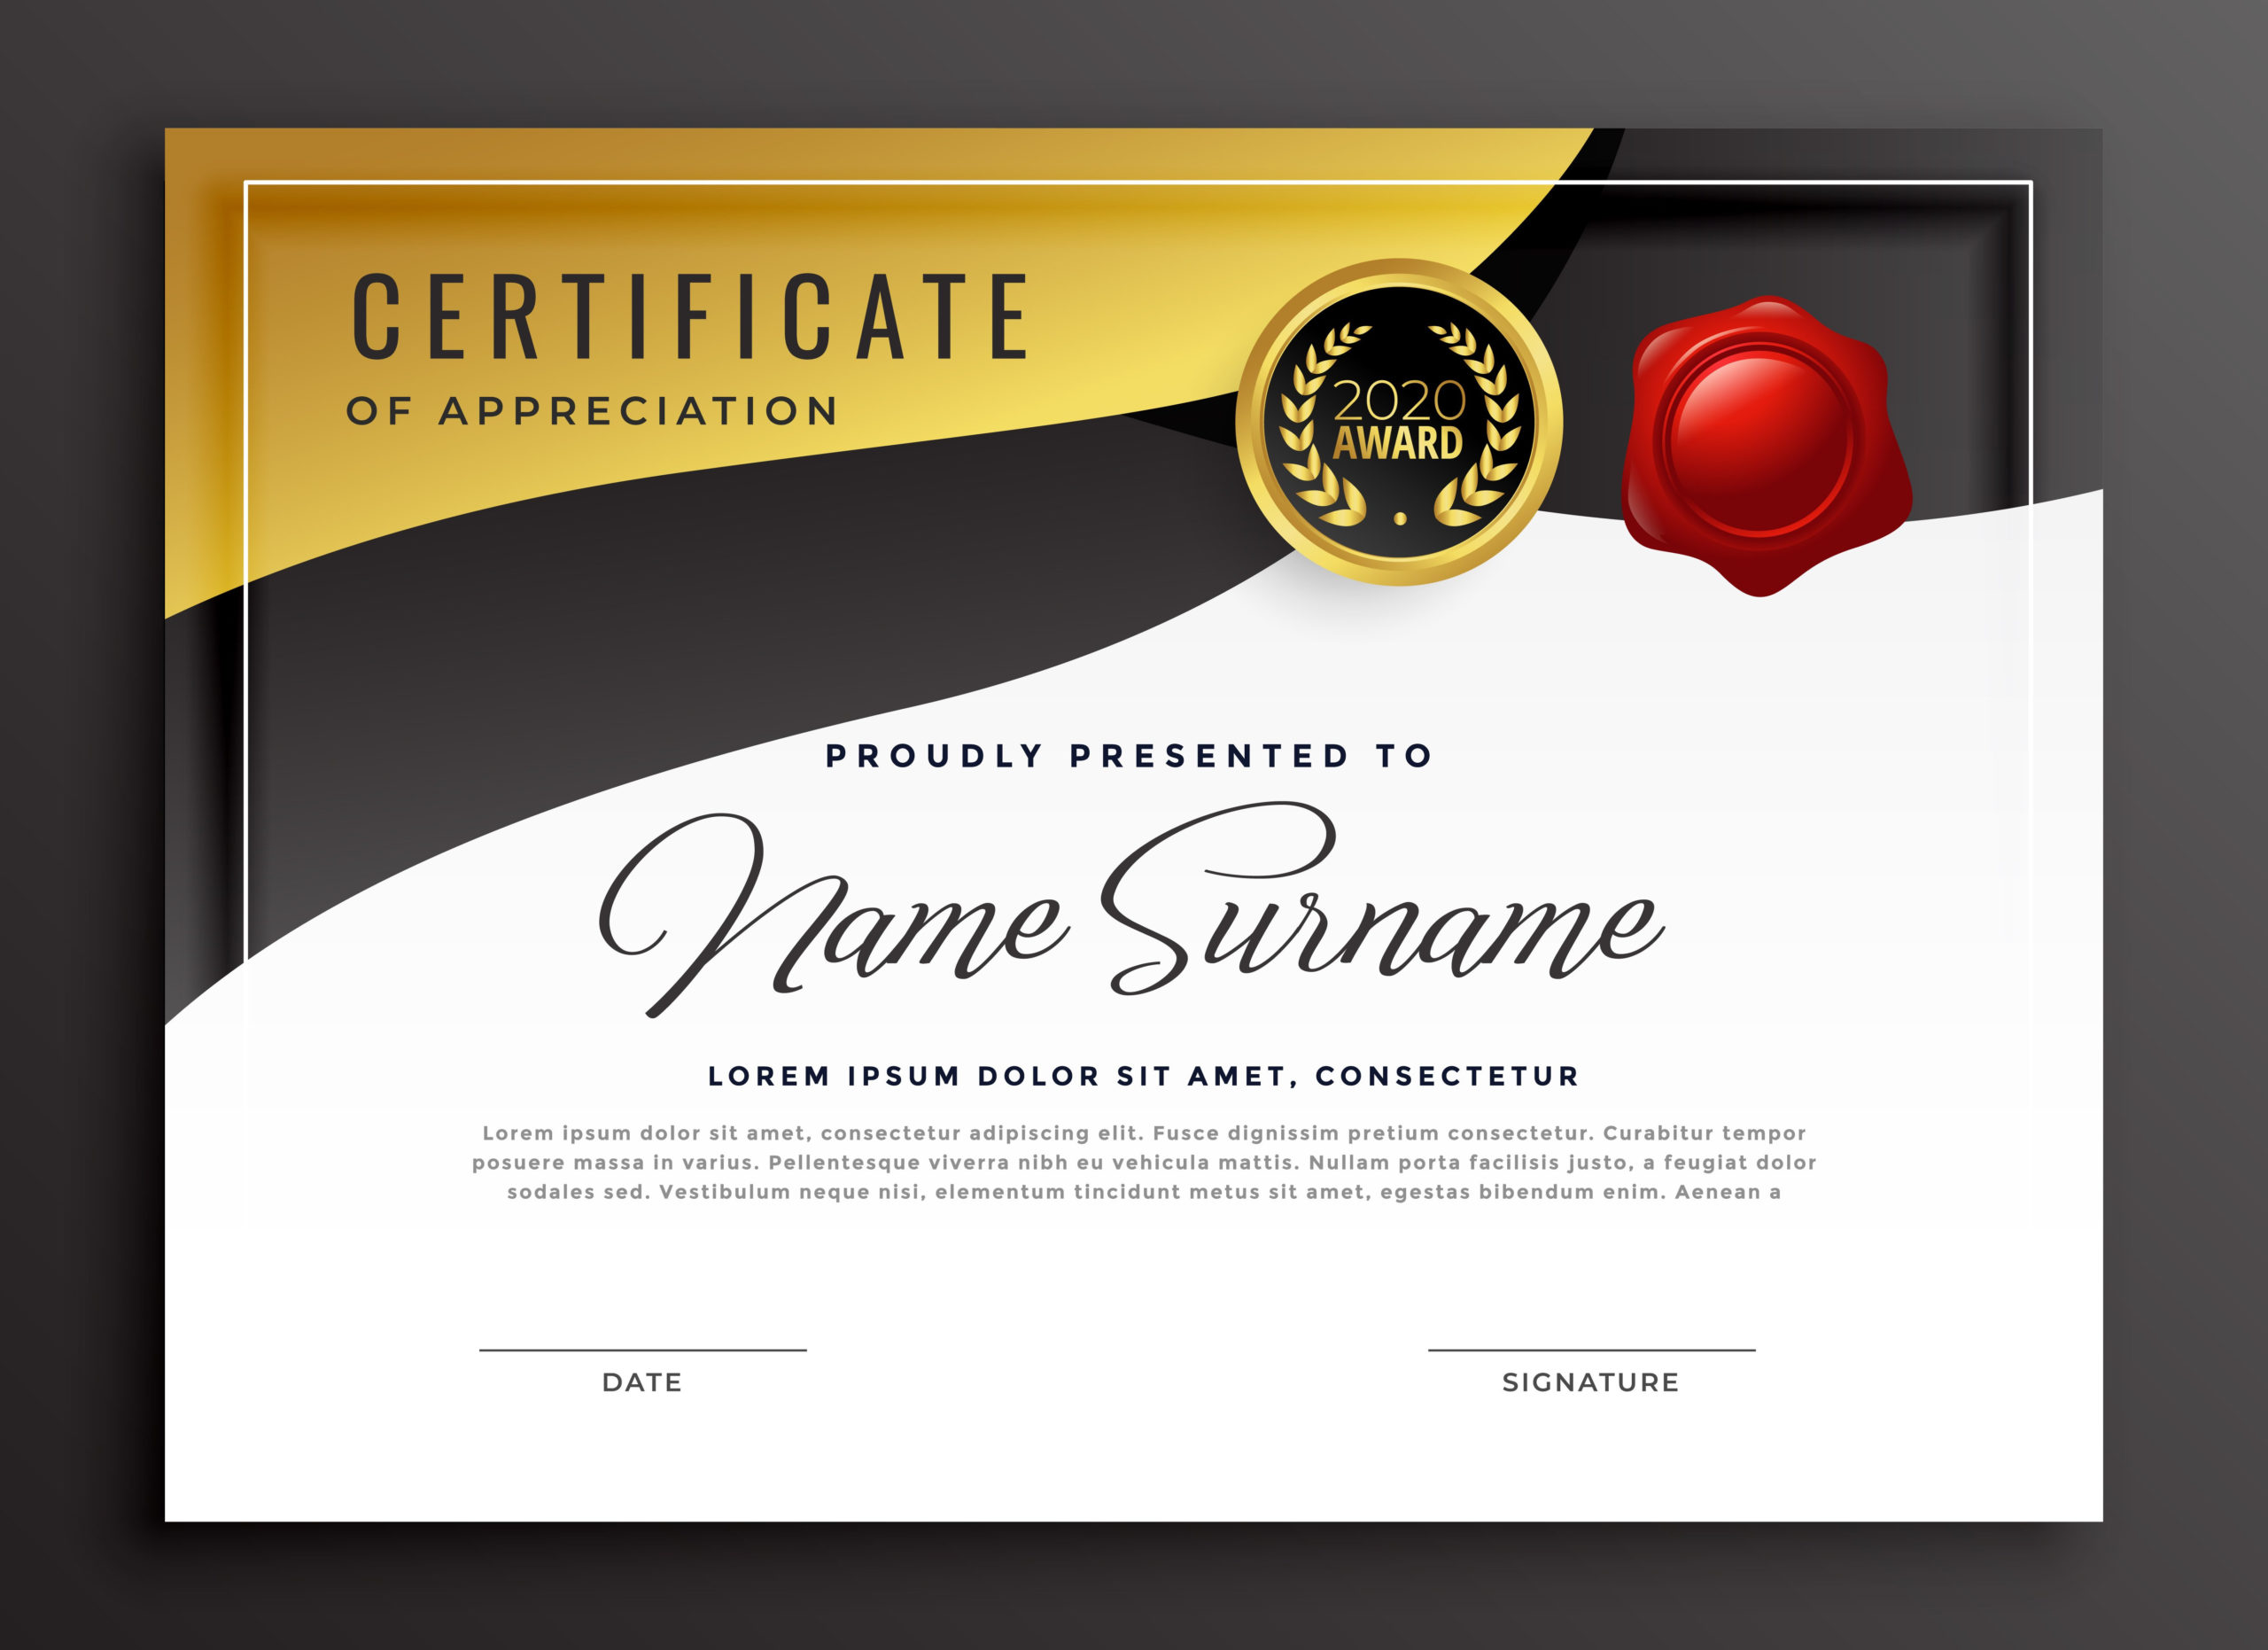 Golden Certificate Of Appreciation Template Download Regarding Free Certificate Of Appreciation Template Downloads